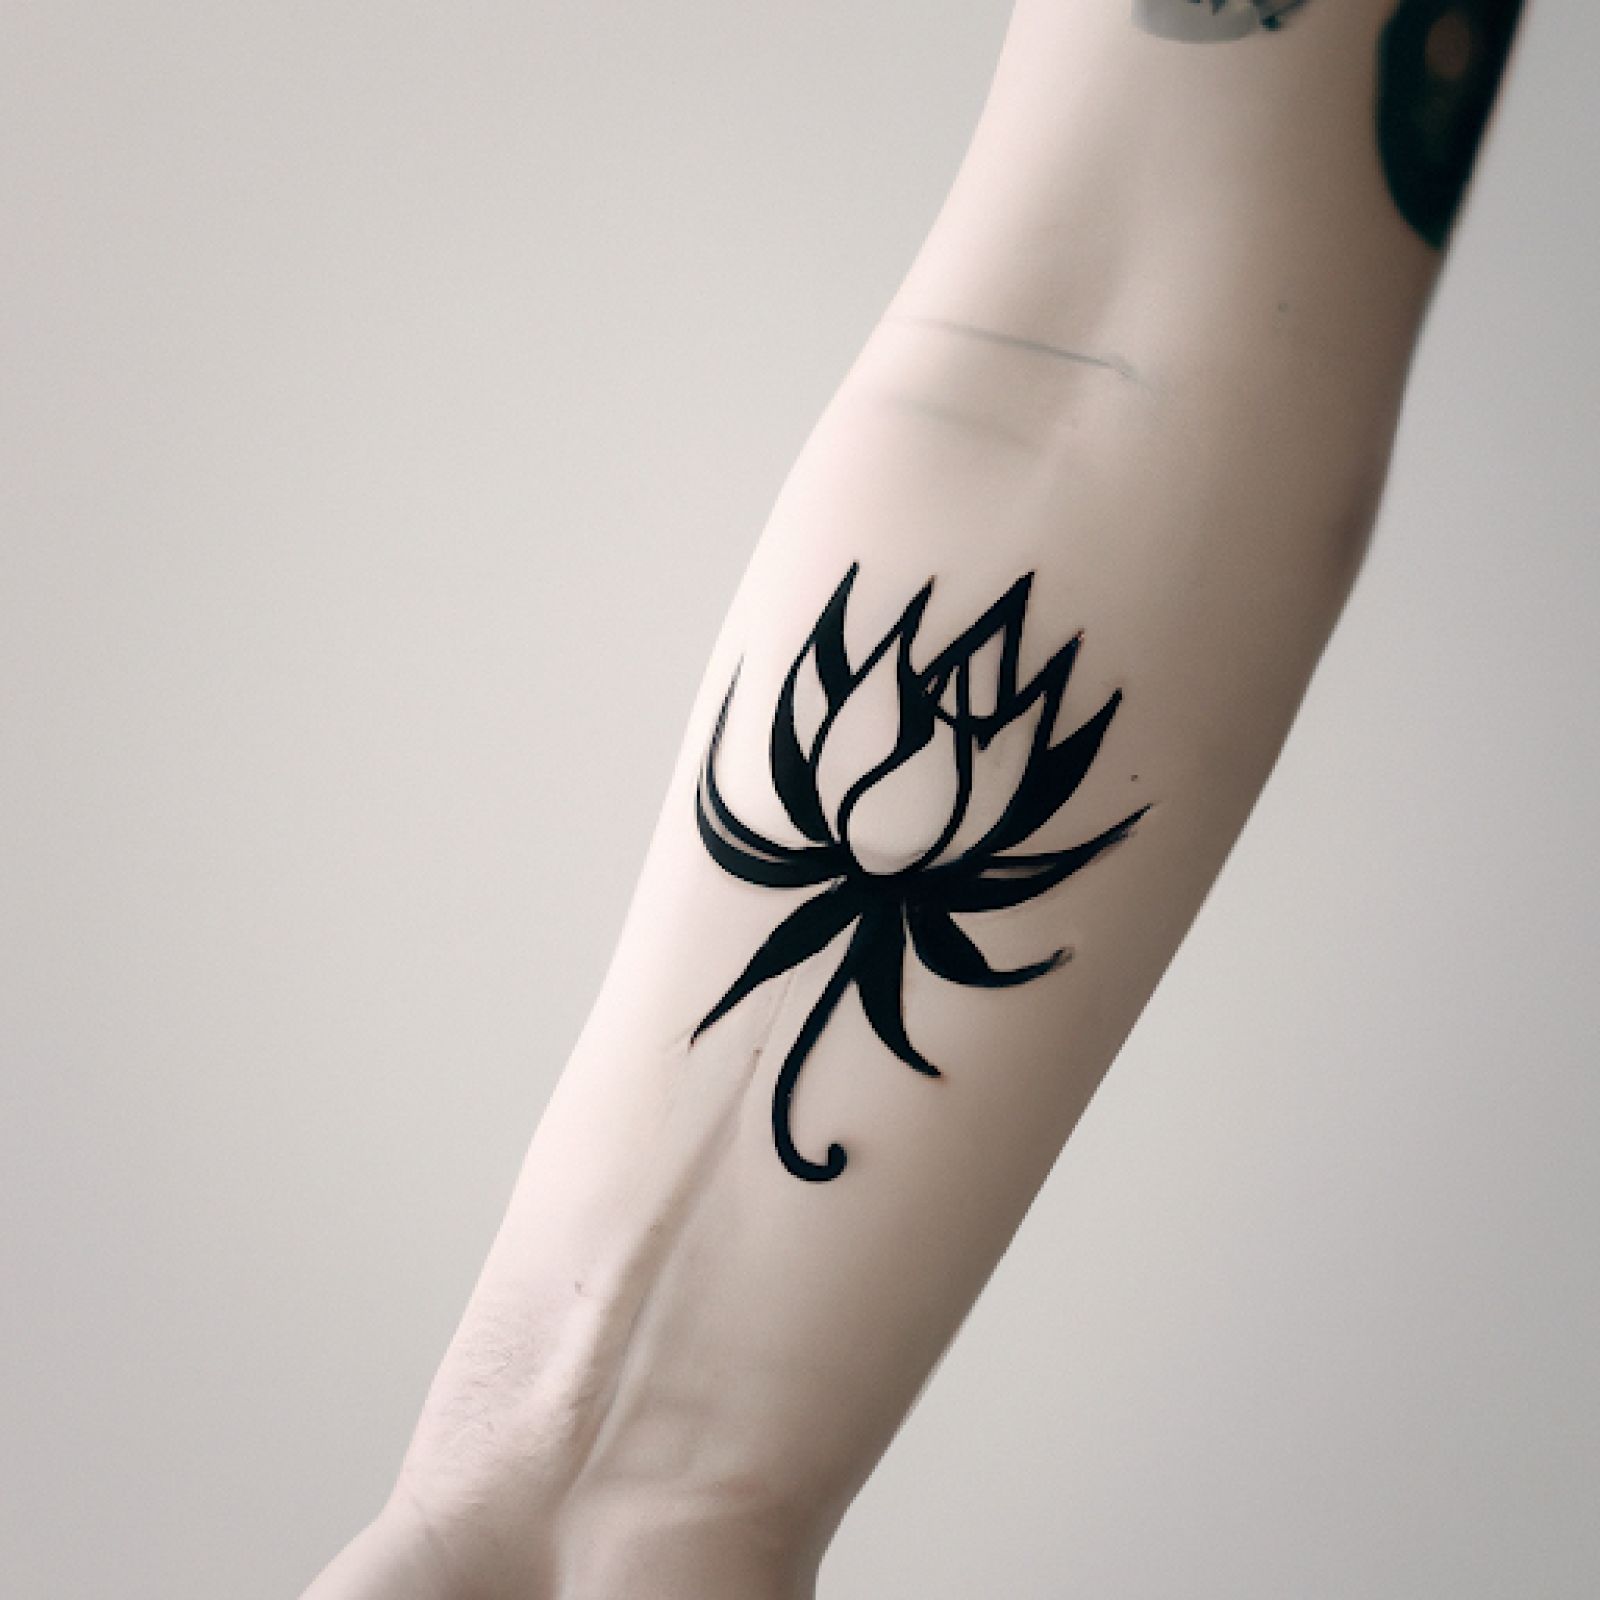 Lotus tattoo on forearm for women